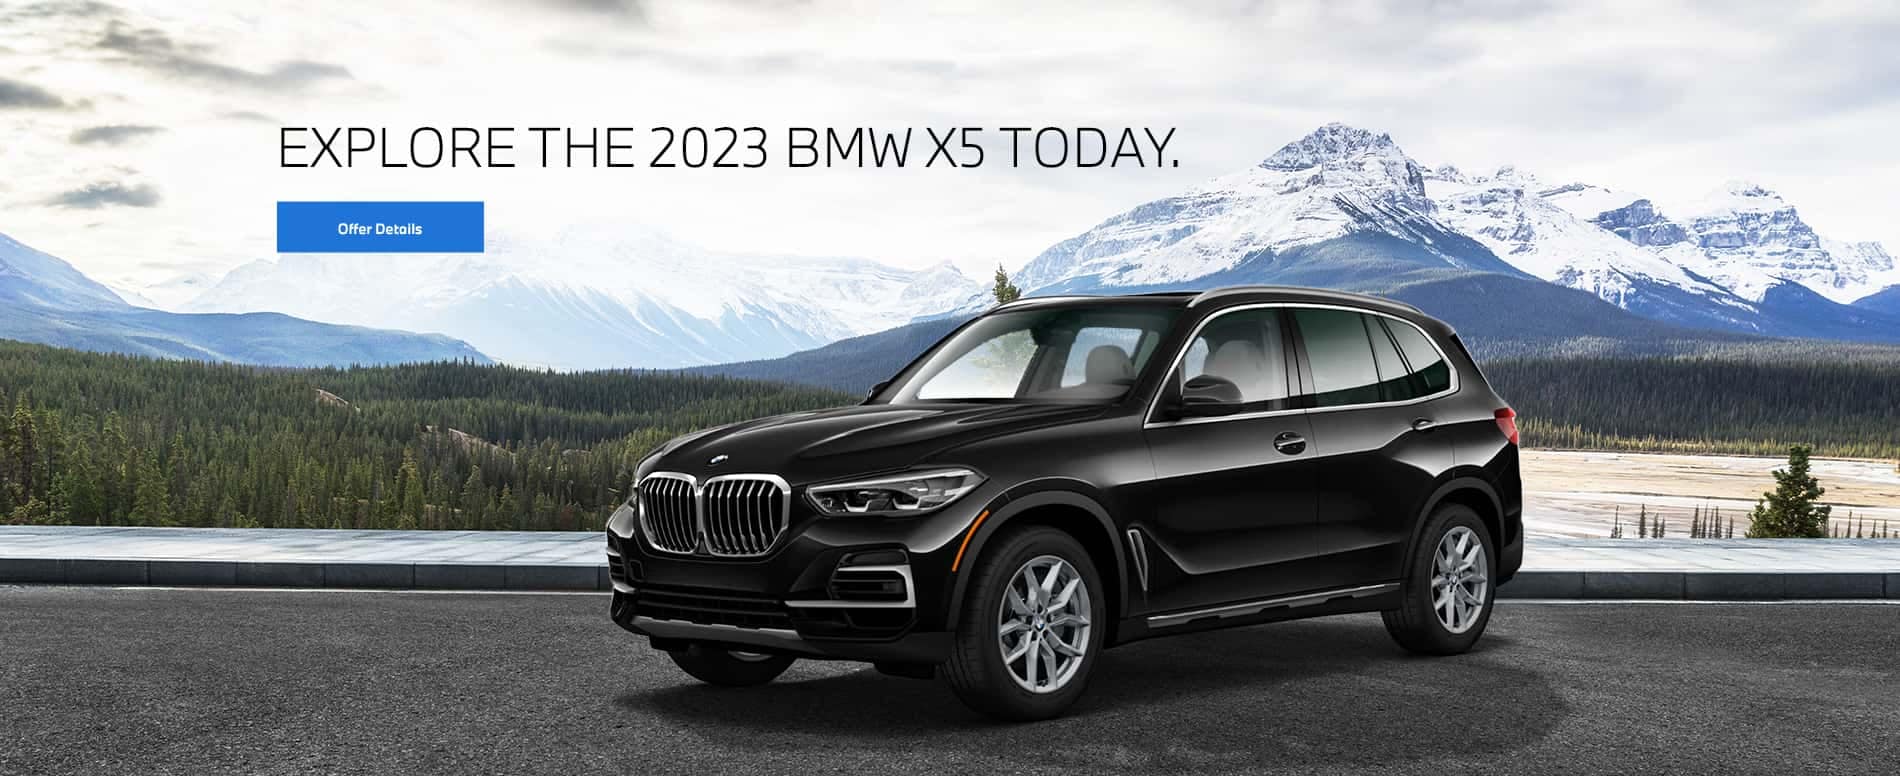 Explore the 2023 BMW X5 today.